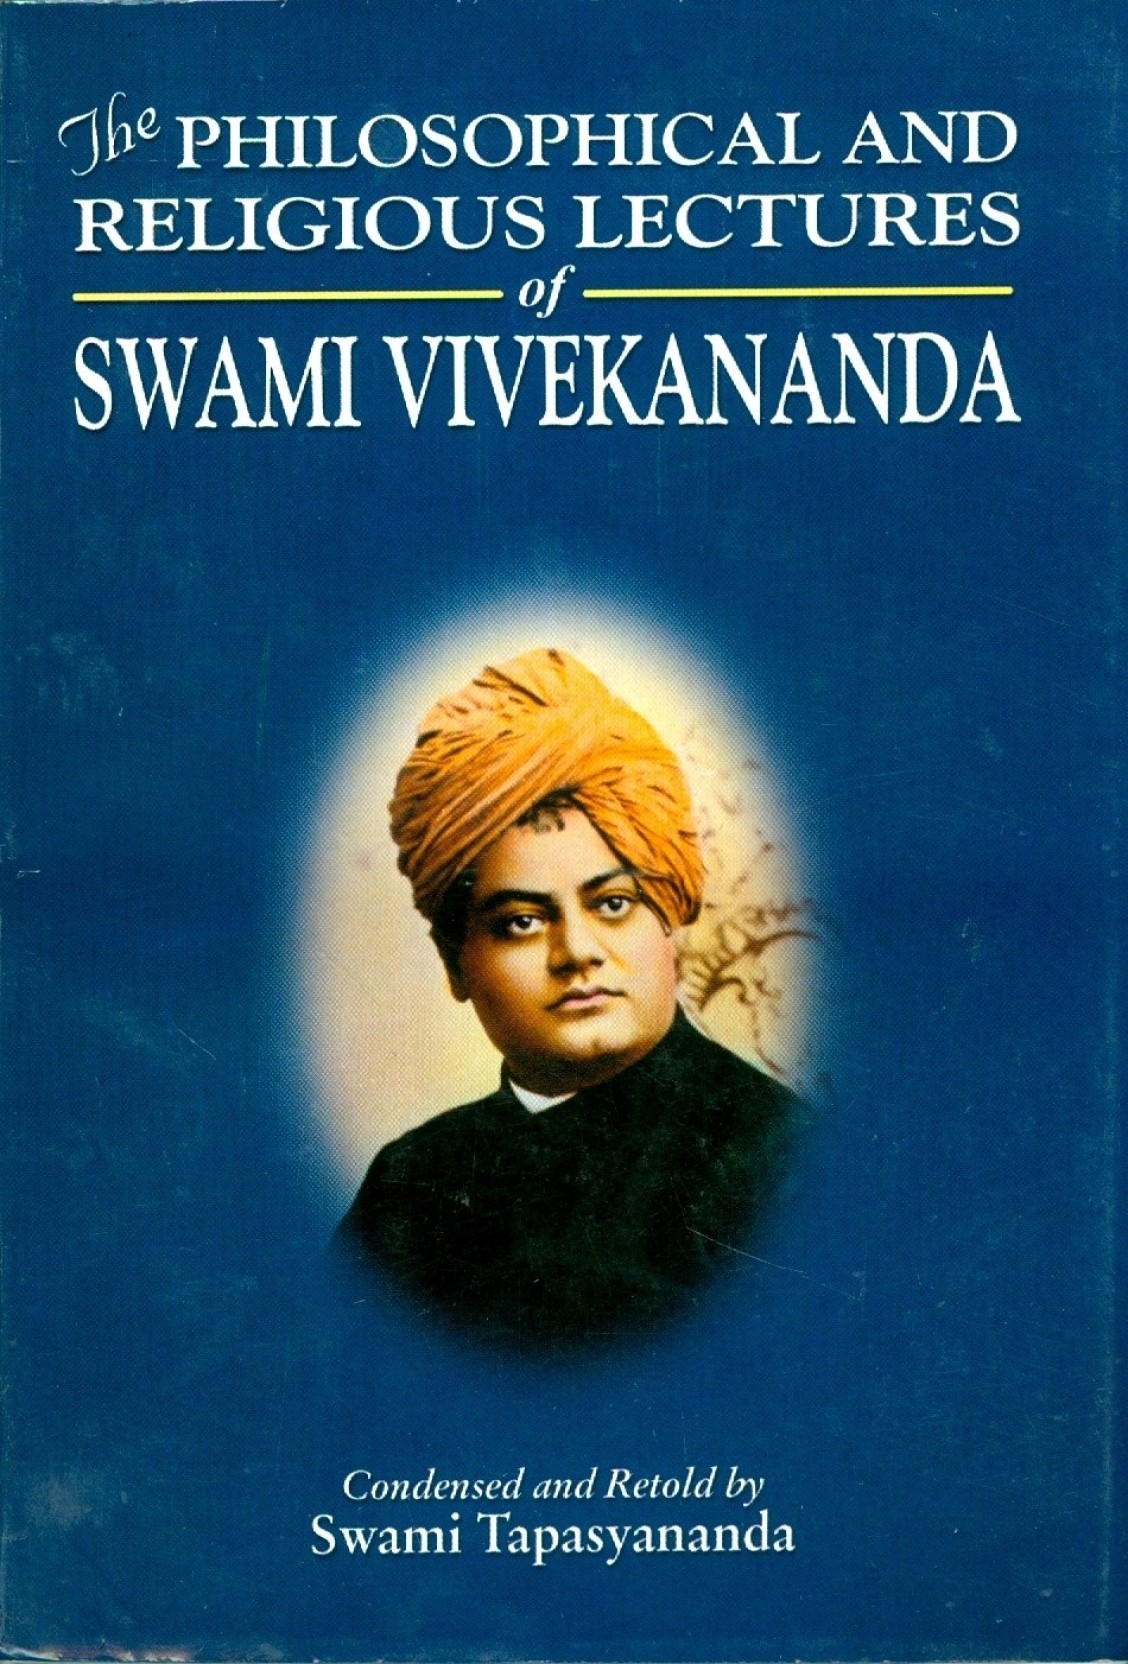 book review on swami vivekananda